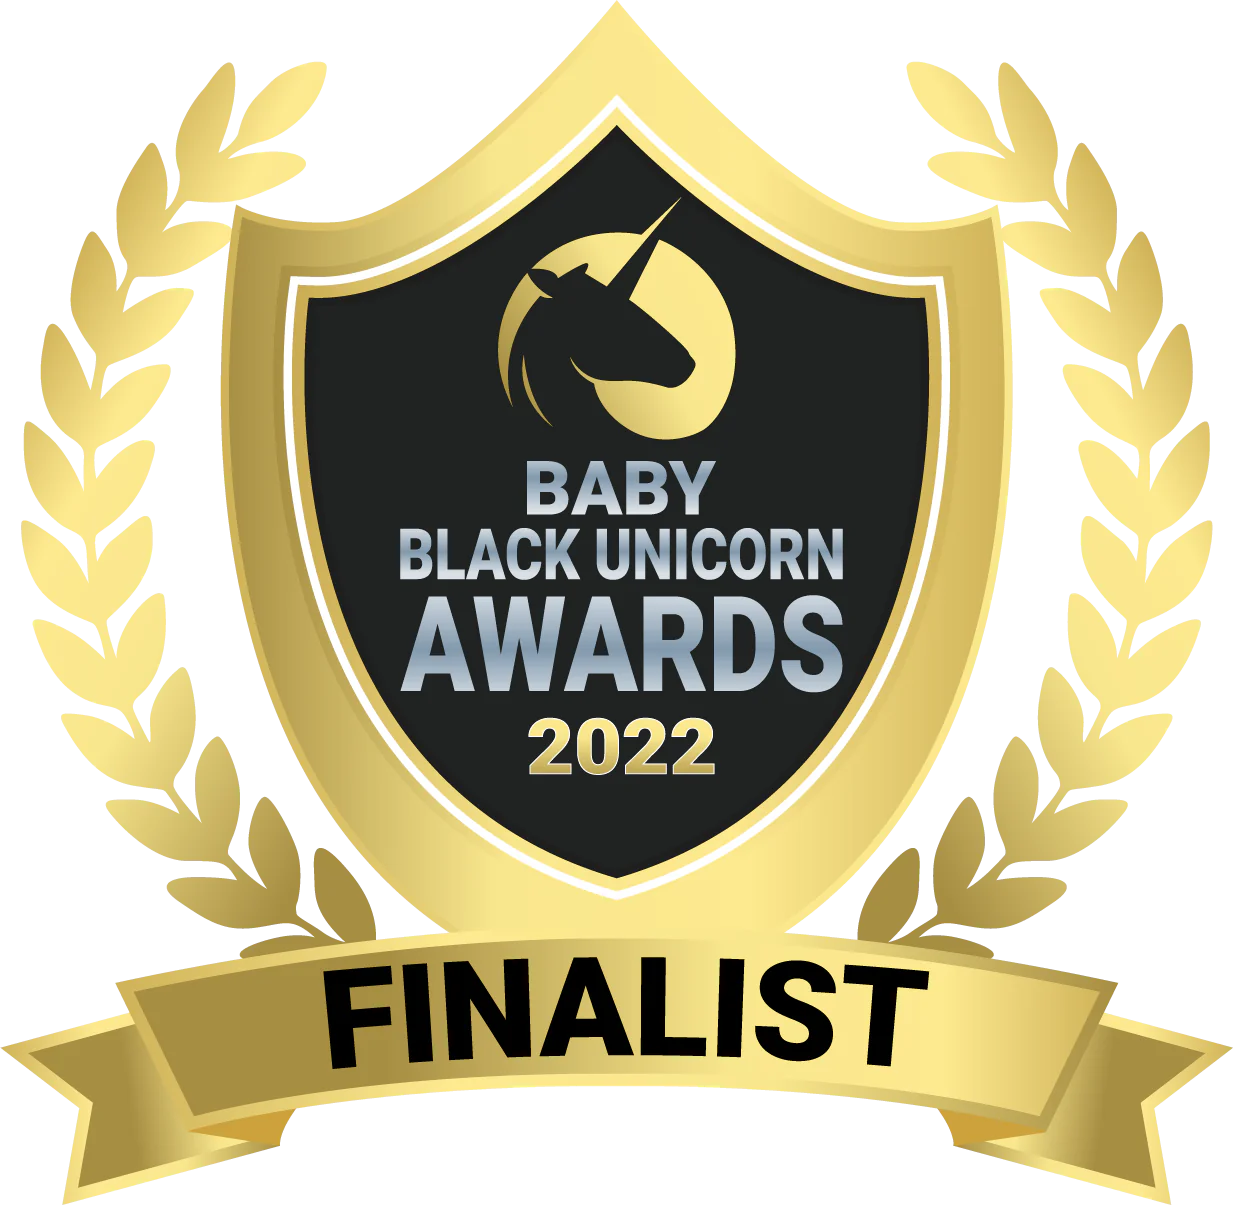 'Finalist' ng Baby Black Unicorns